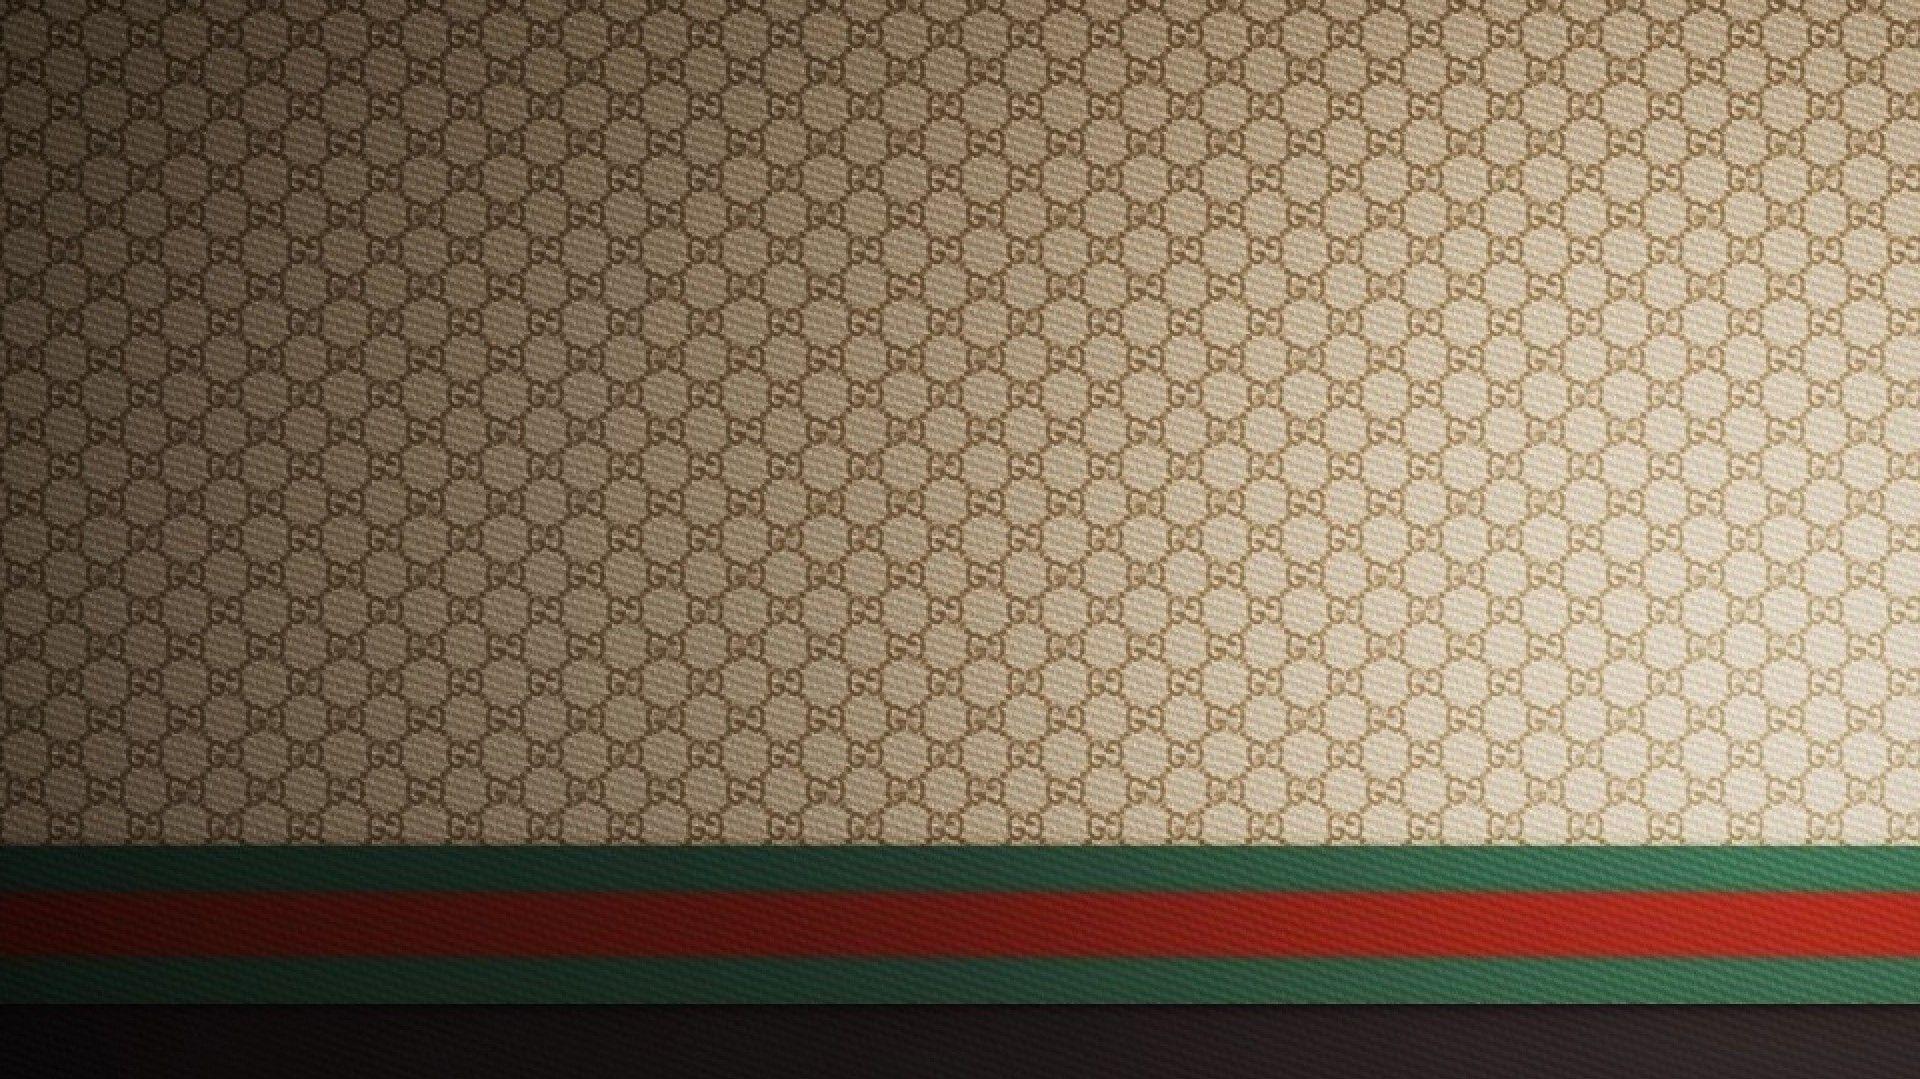 48+] Gucci iPhone Wallpaper Supreme on WallpaperSafari  Gucci pattern, Supreme  iphone wallpaper, Pattern wallpaper